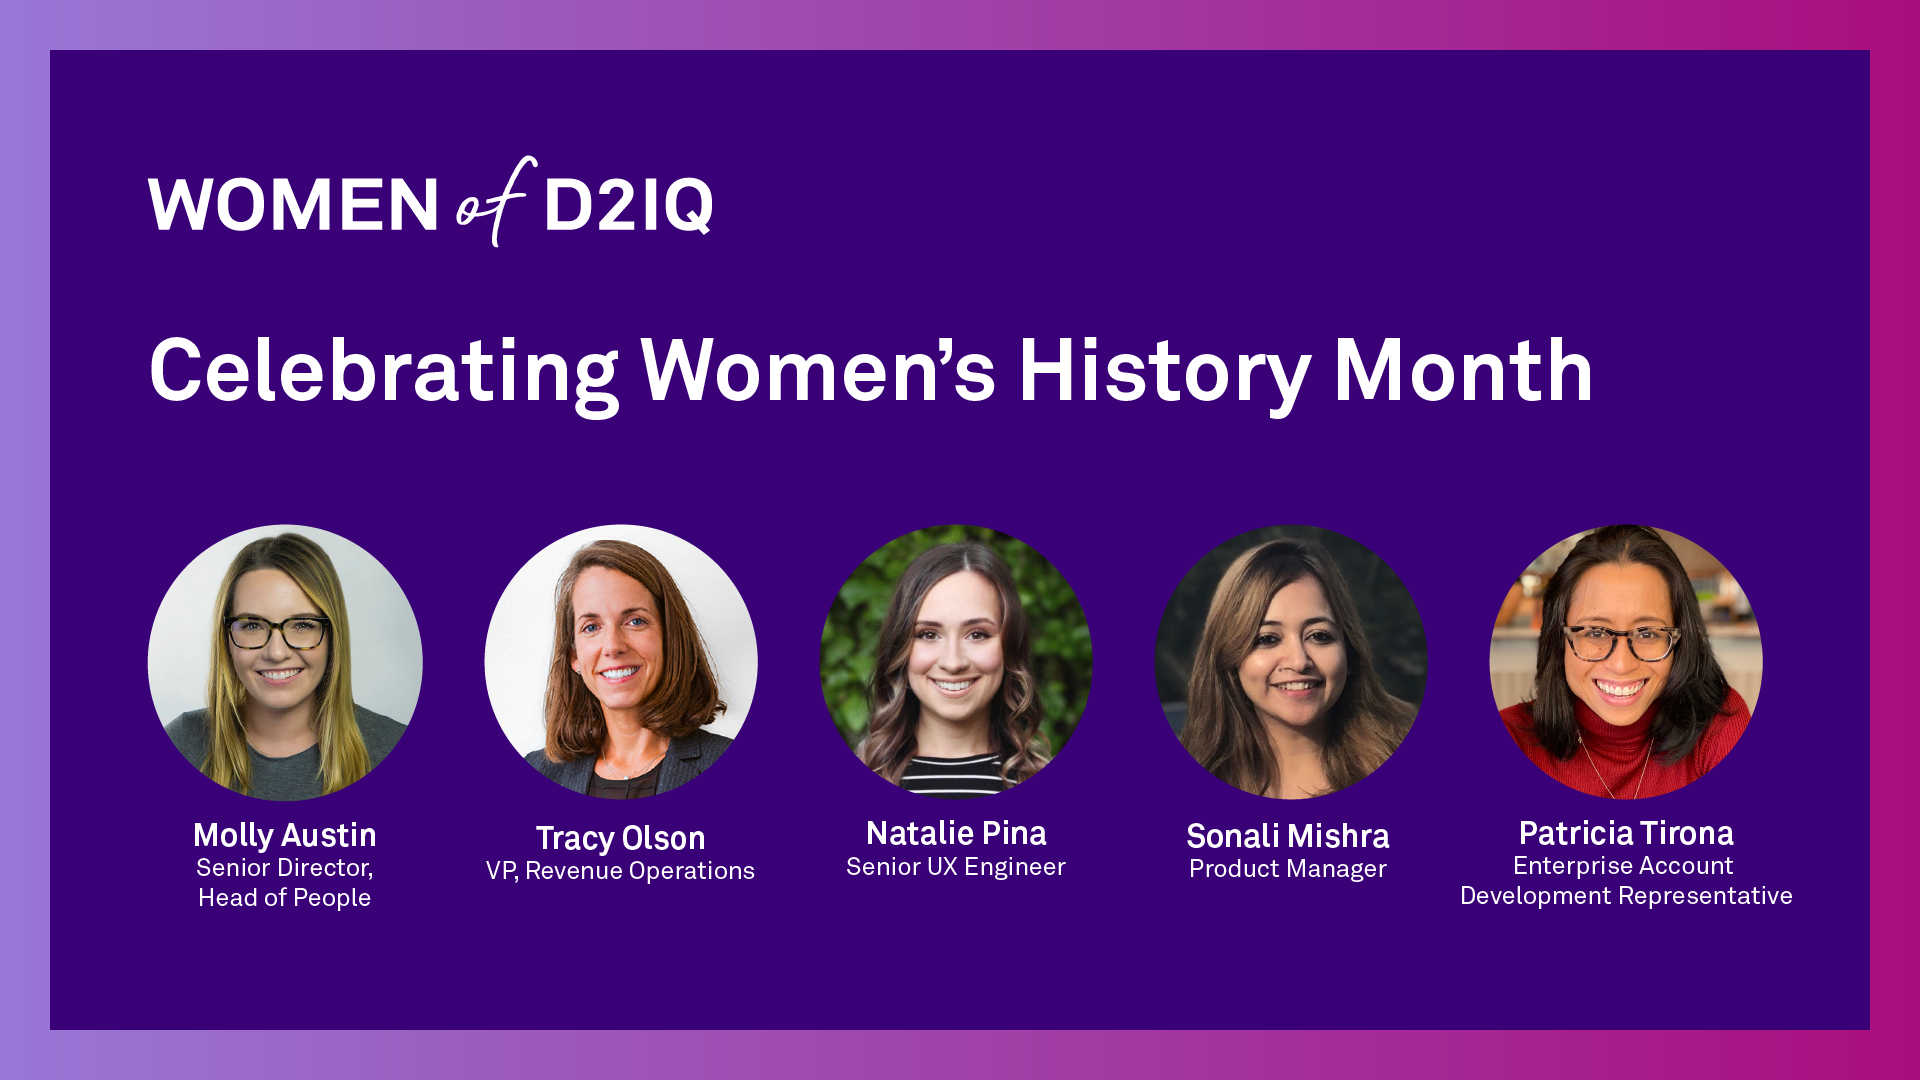 Women of D2iQ: In Celebration of Women’s History Month